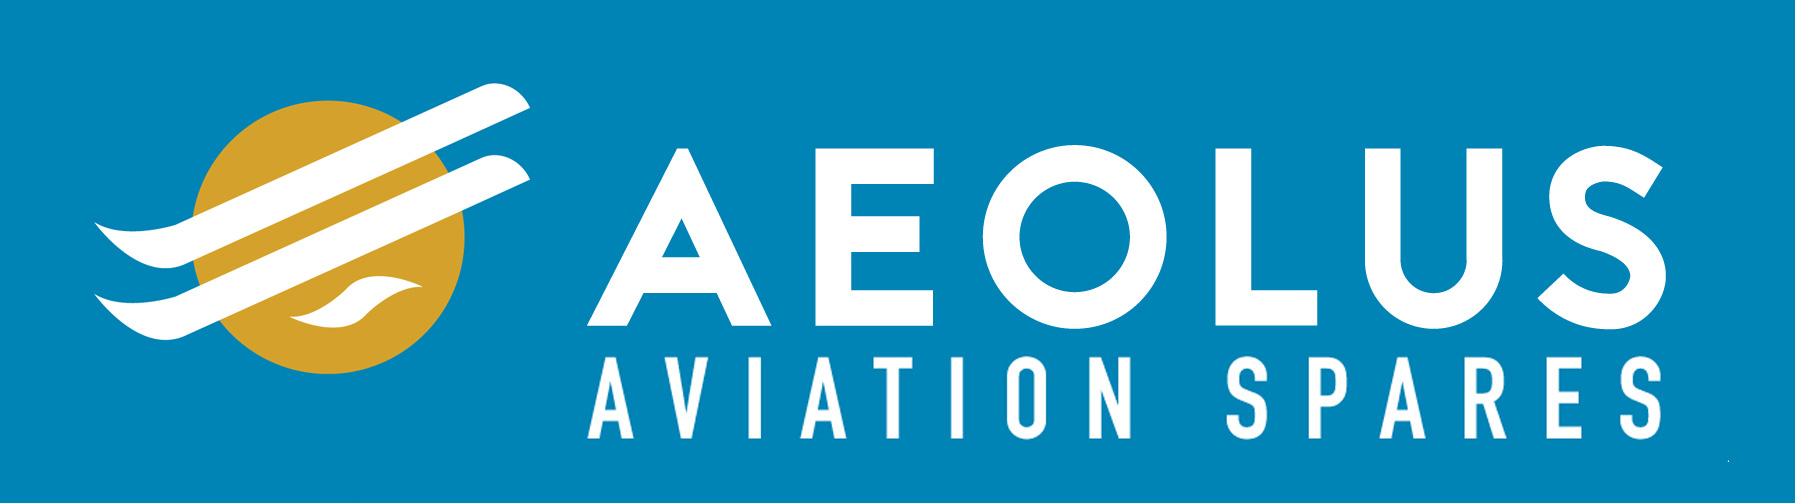 Aeolus Aviation Spares